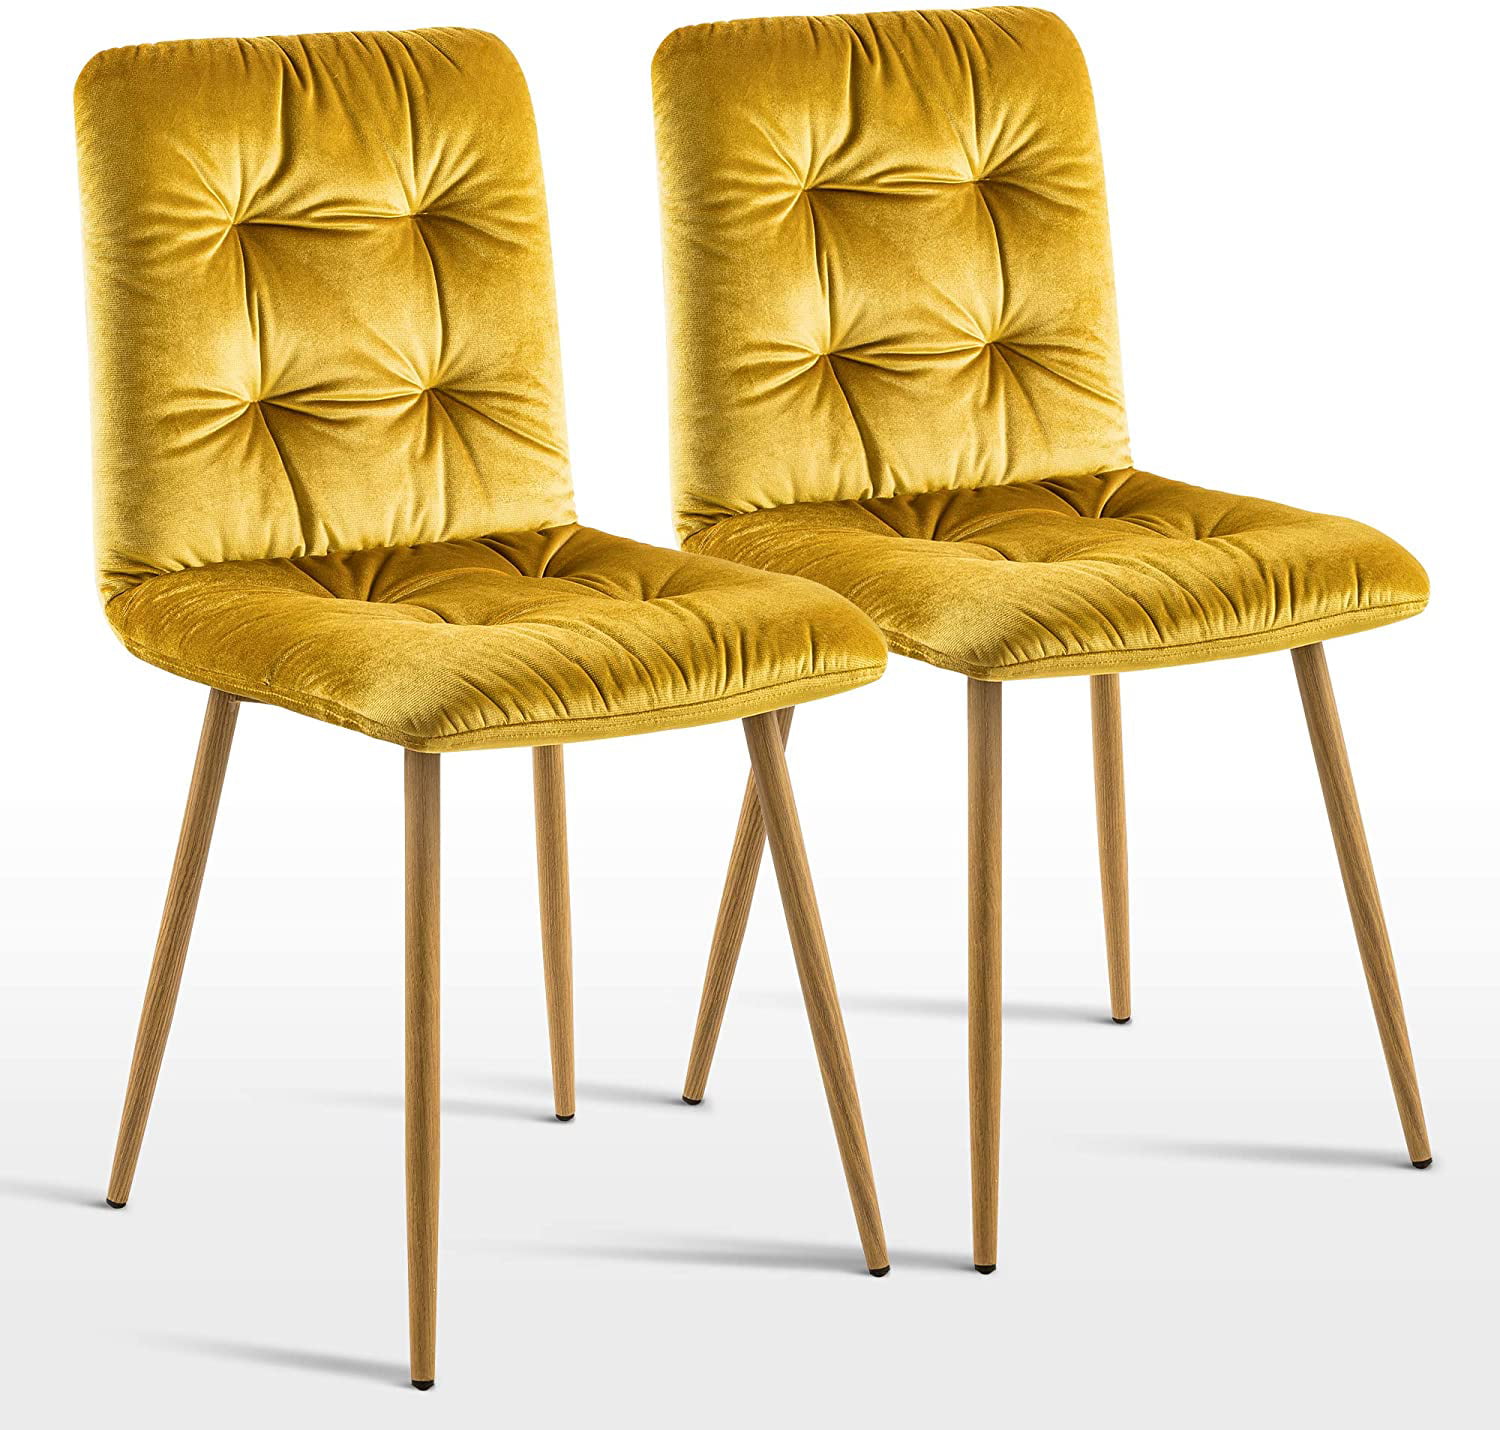 Ivinta MidCentury Yellow Dining Chairs Set of 2, Velvet